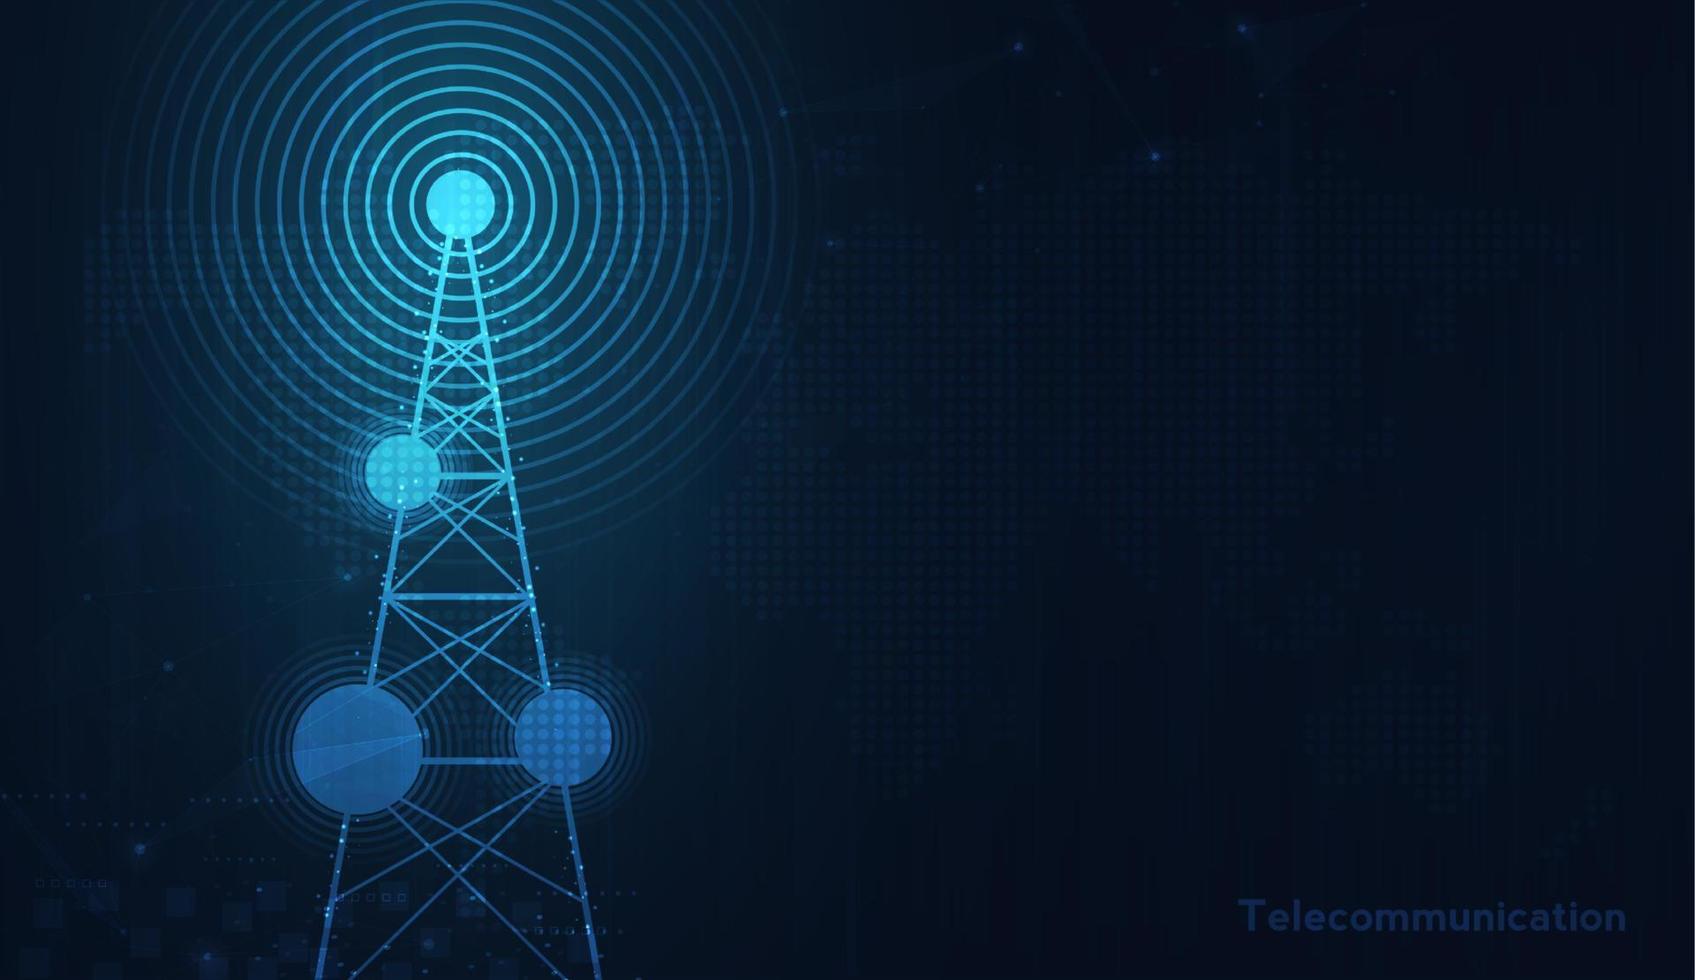 Telecommunications signal transmitter, radio tower from lines. Illustration vector design.